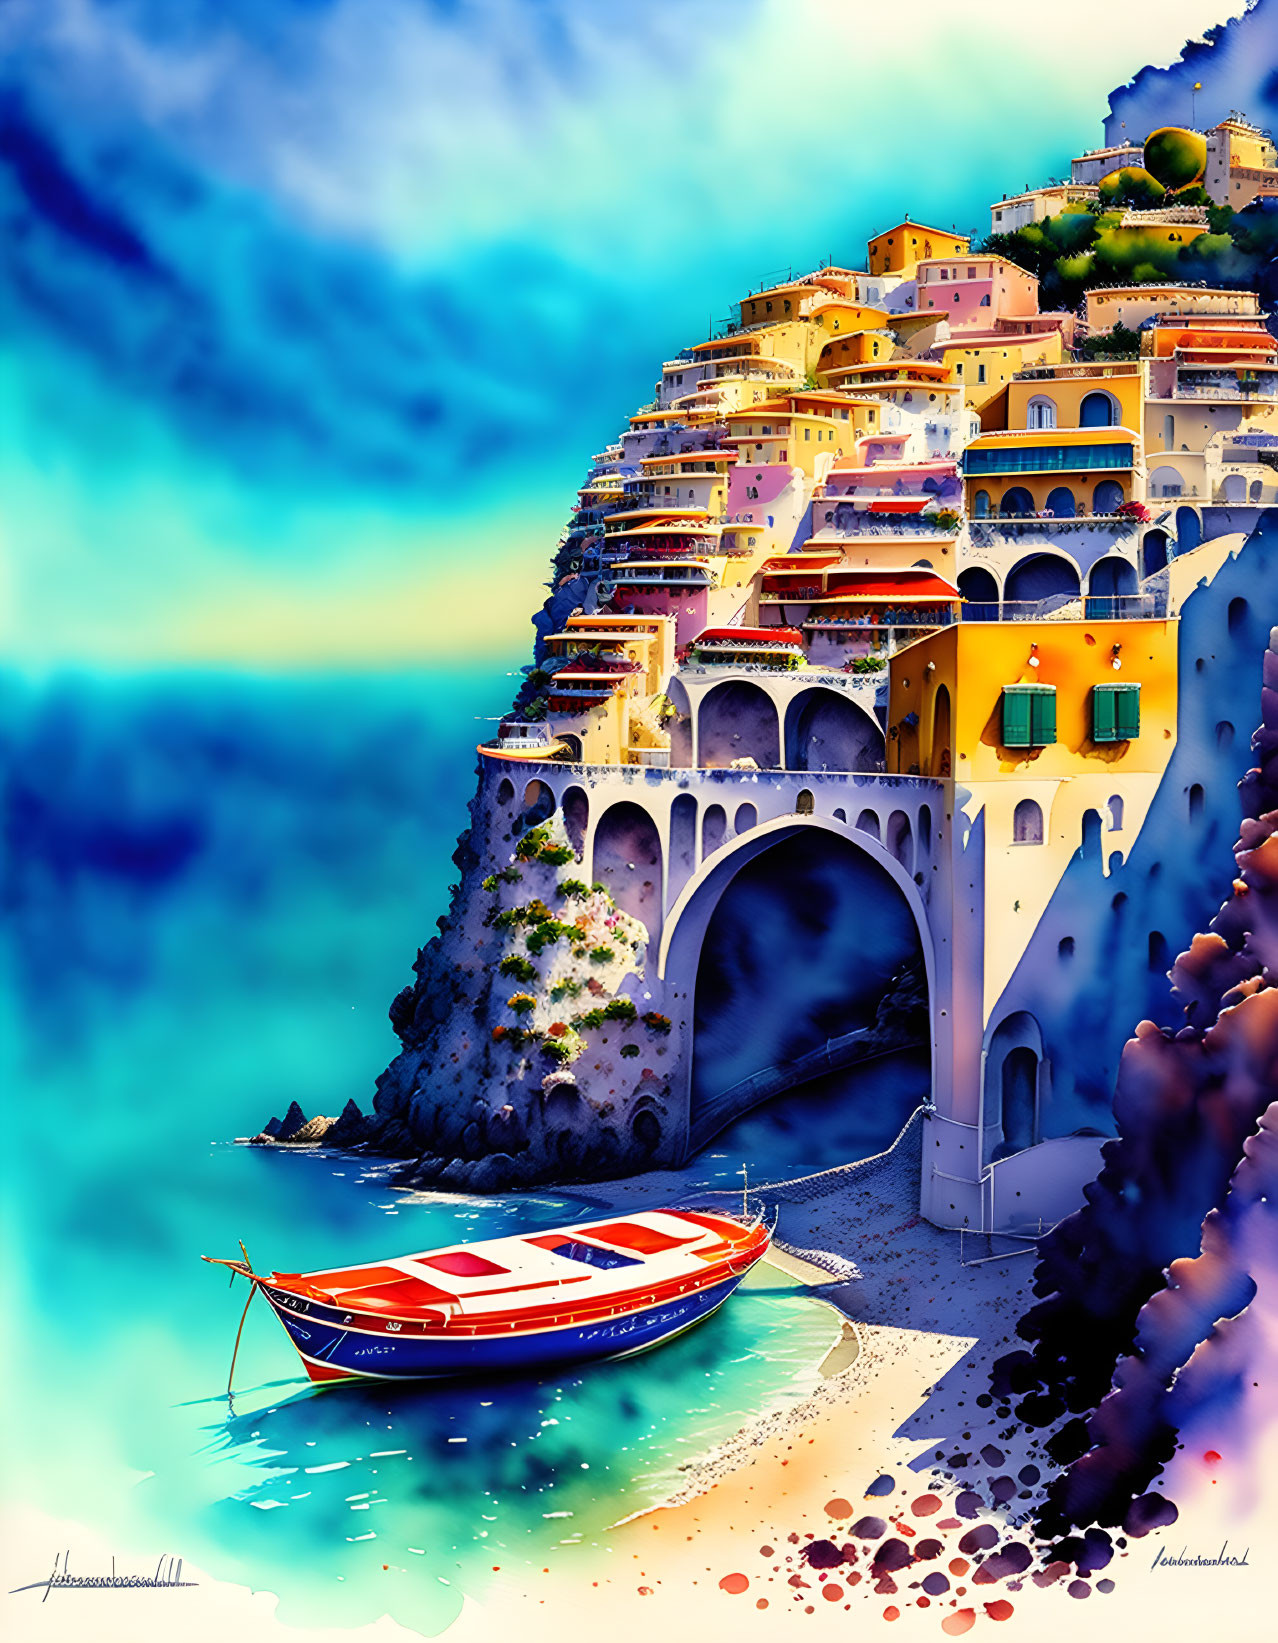 Colorful Coastal Town Illustration Overlooking Blue Sea